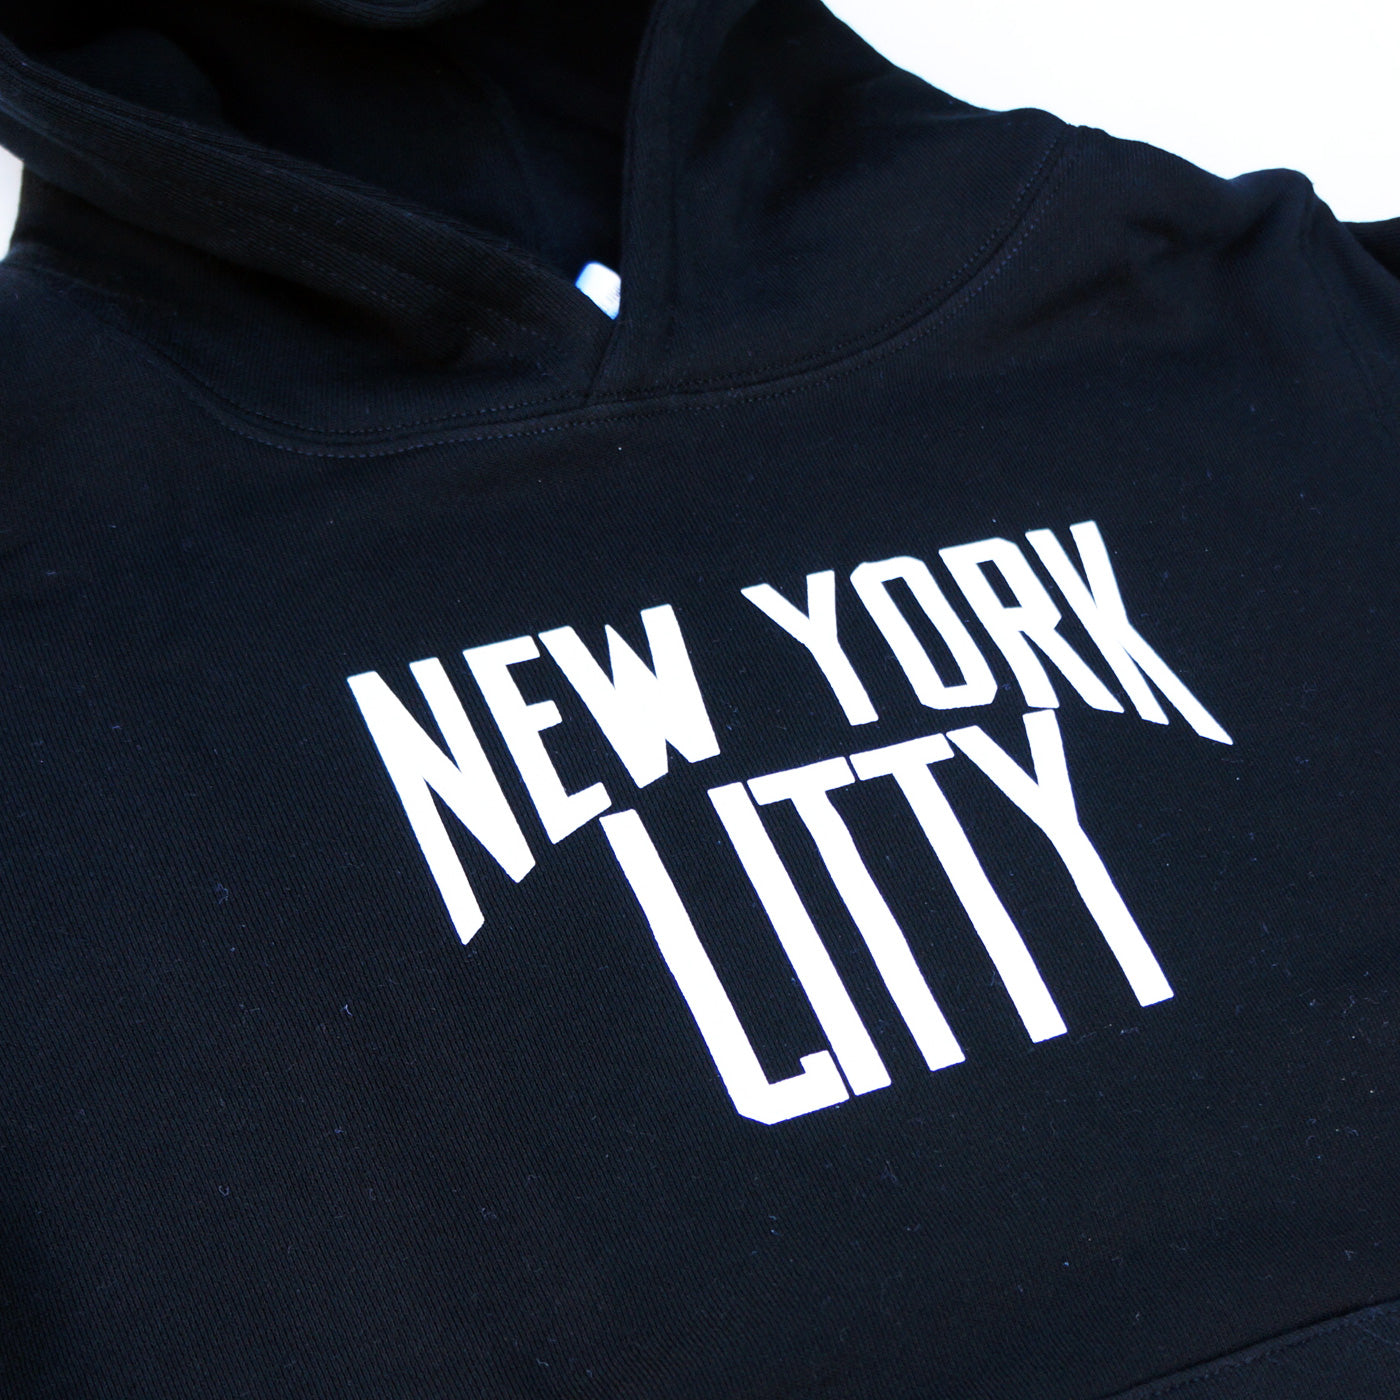 New York Litty Hoodie (Black)